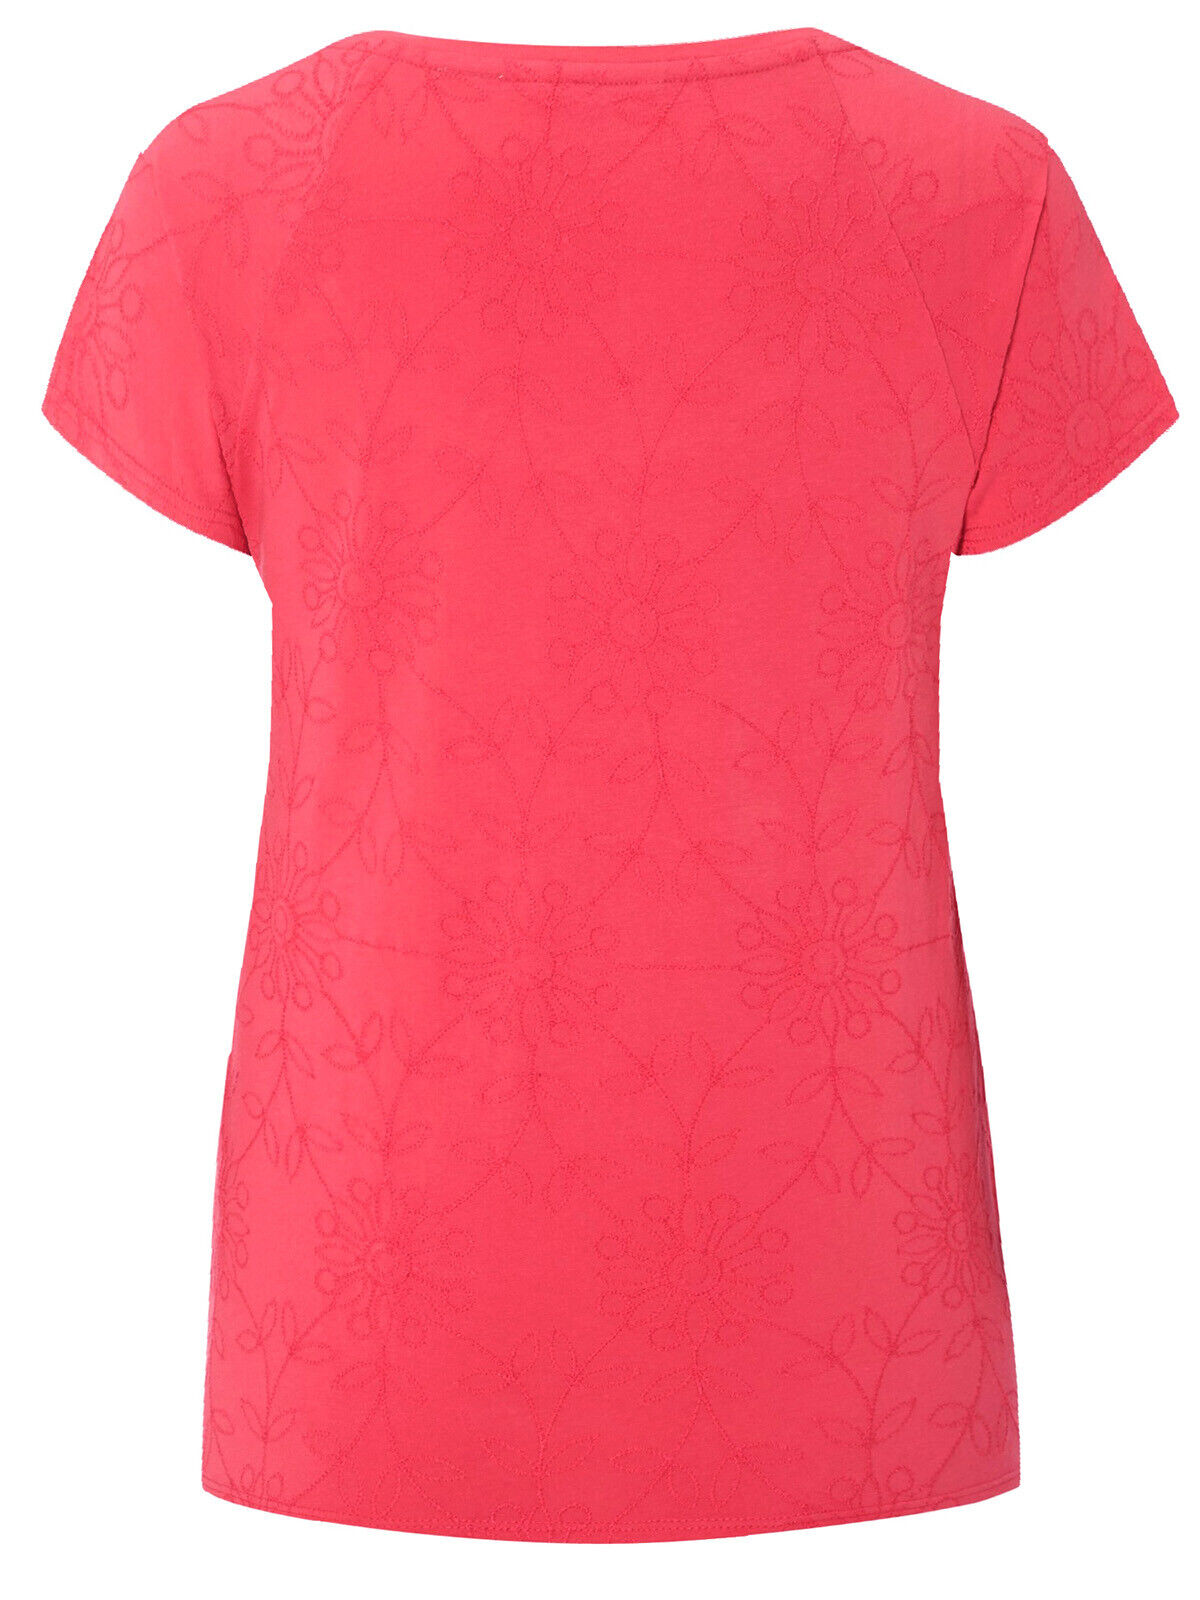 EX WHITE STUFF Pink Cotton Rosanna Jersey Embroidered T-Shirt Size 12 RRP £32